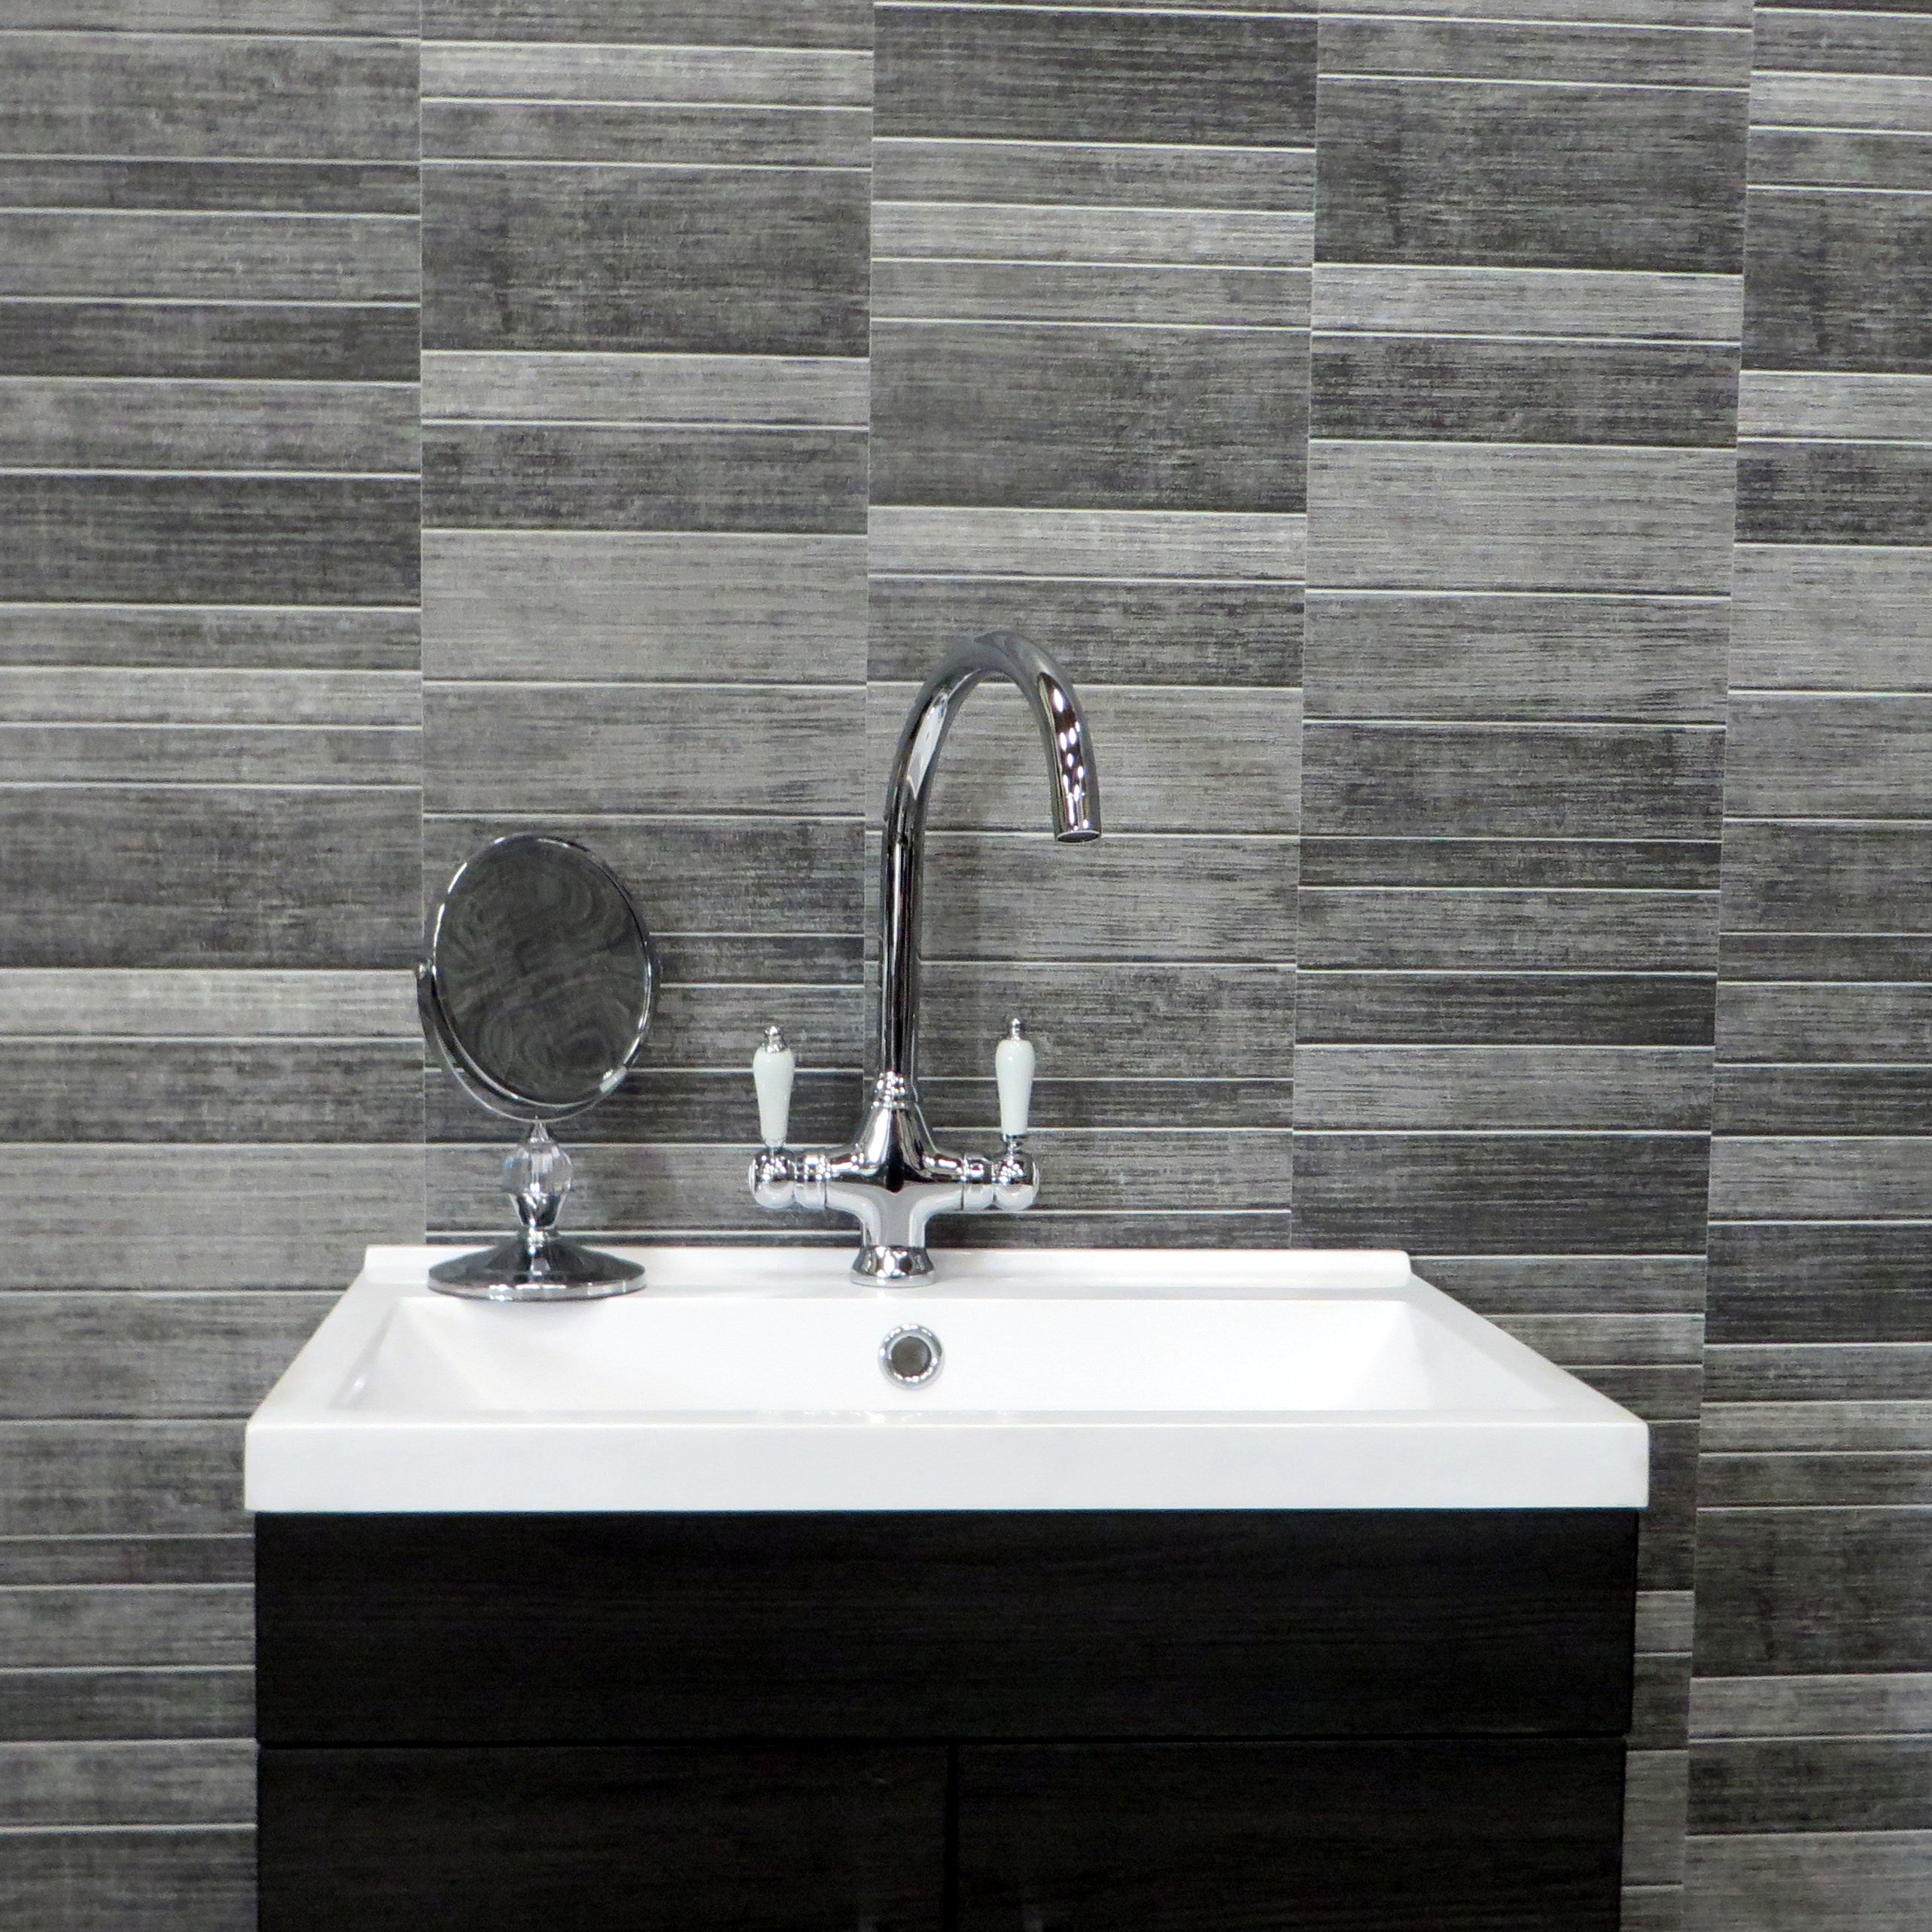 Dark Grey Small Tile 5mm Bathroom Cladding Wet Wall Panels